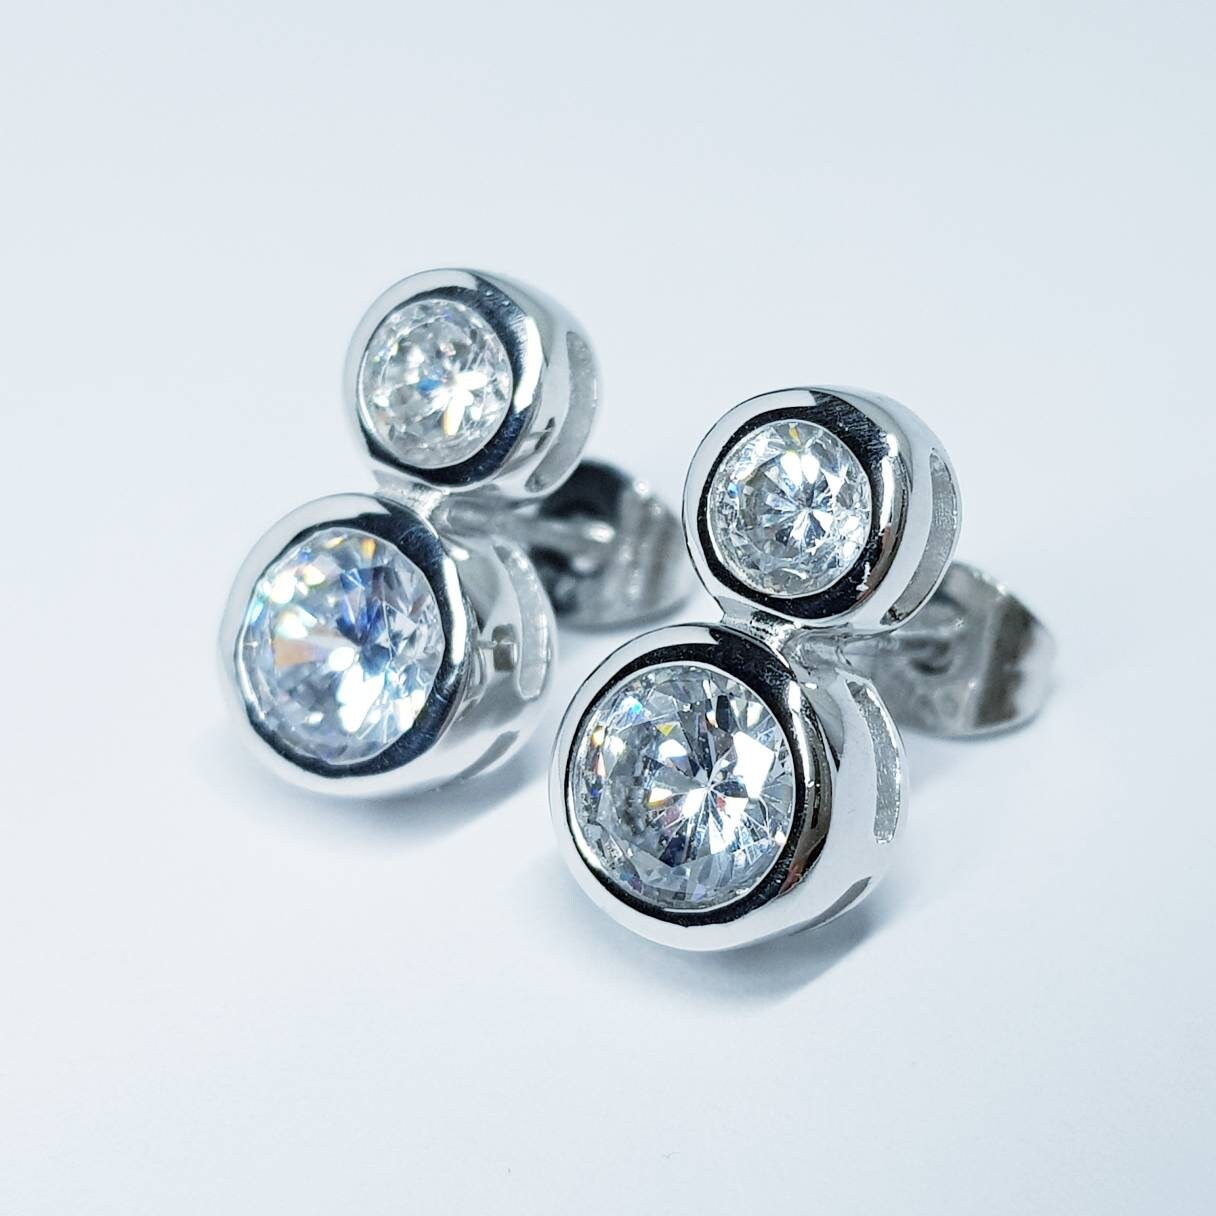 Sterling Silver stud earrings, two stone stud earrings, man made Diamond Simulant studs,